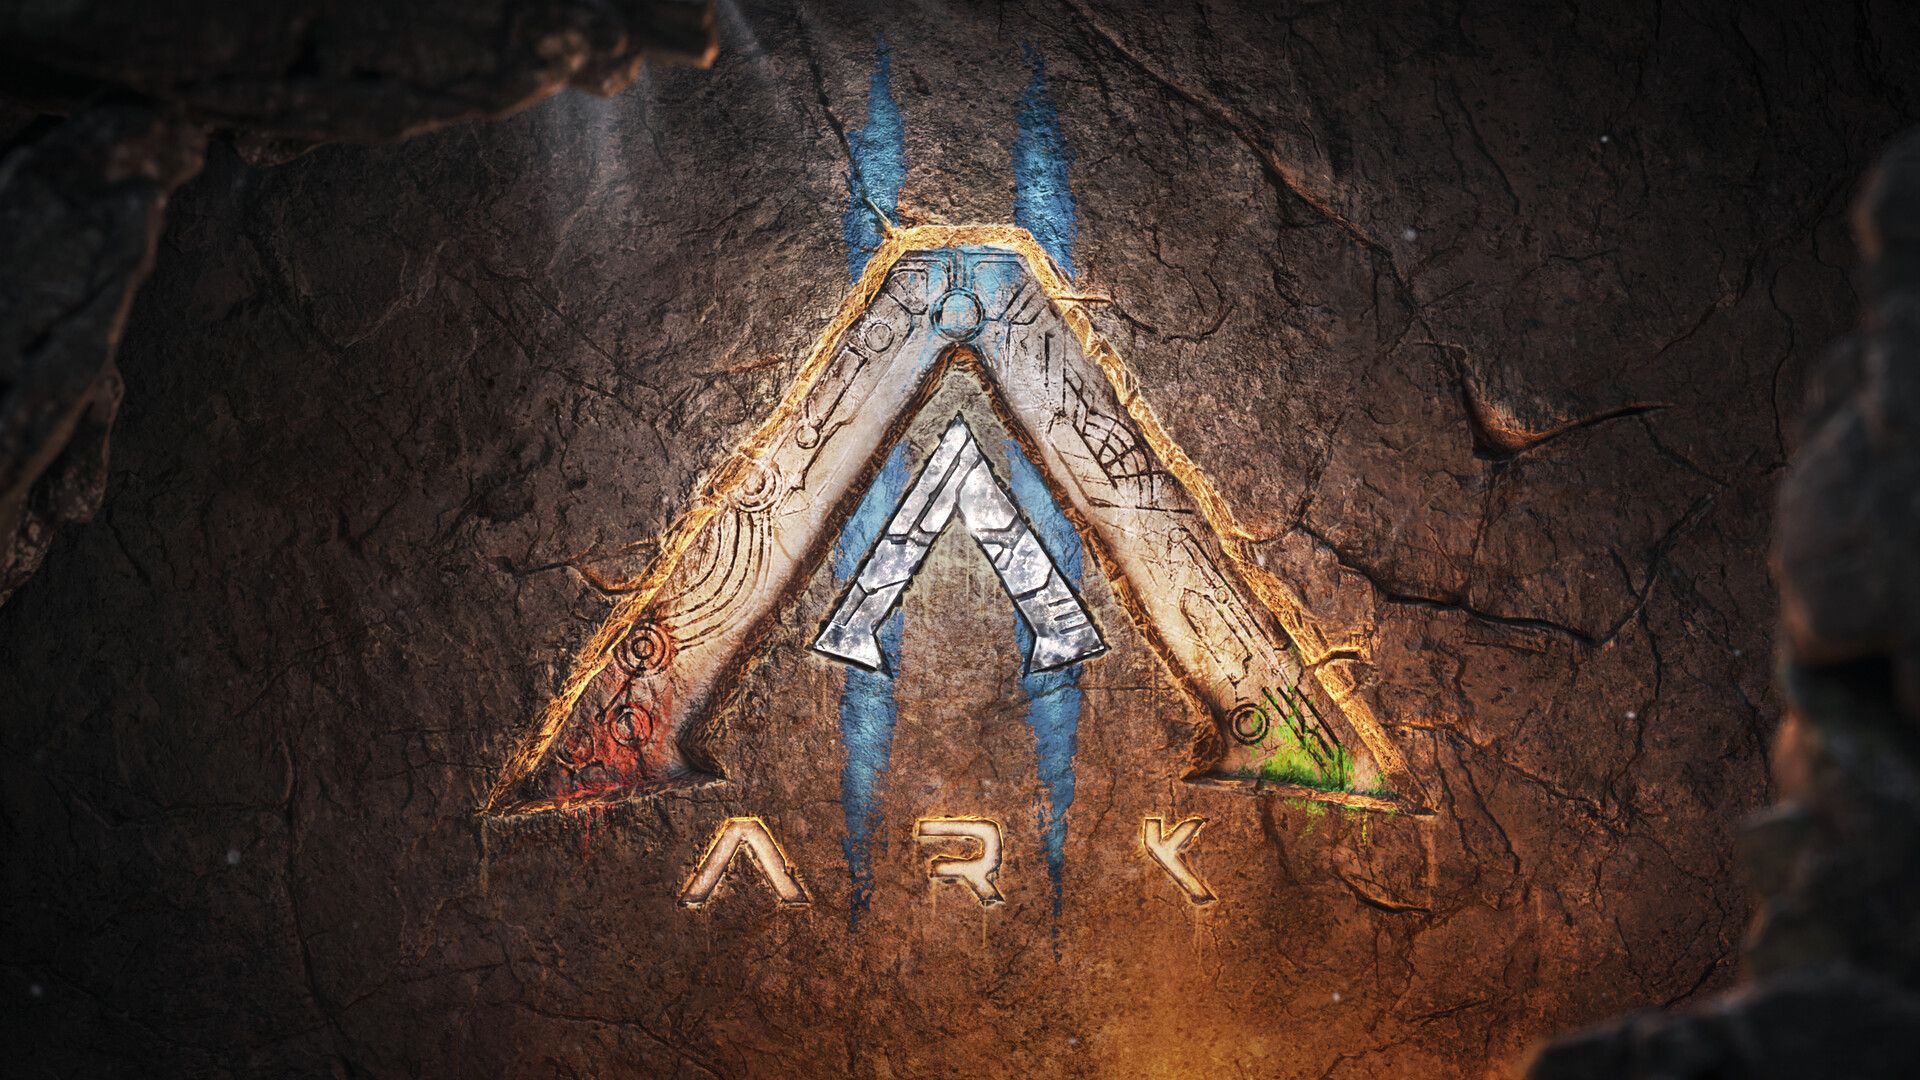 Ark 2 Vin Diesel Trailer 2021 - New game coming Ark 2 2021 with